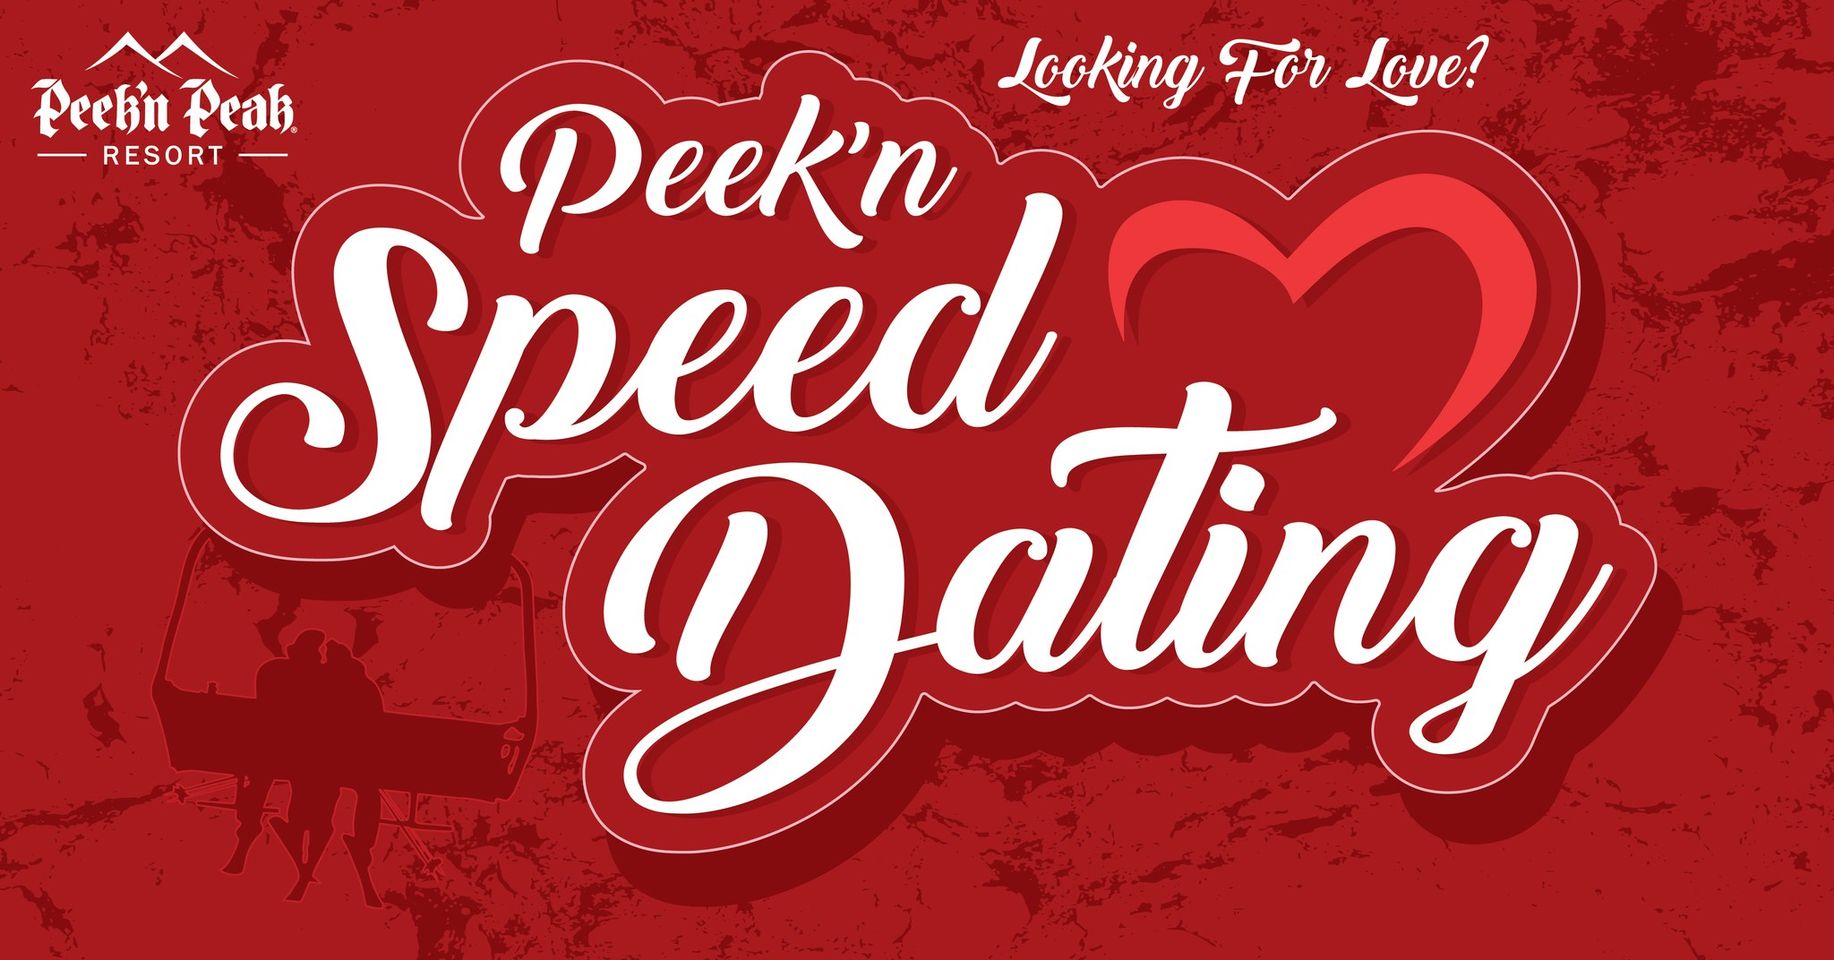 Peek'n Peak to Host Speed Dating Event on Valentine's Day